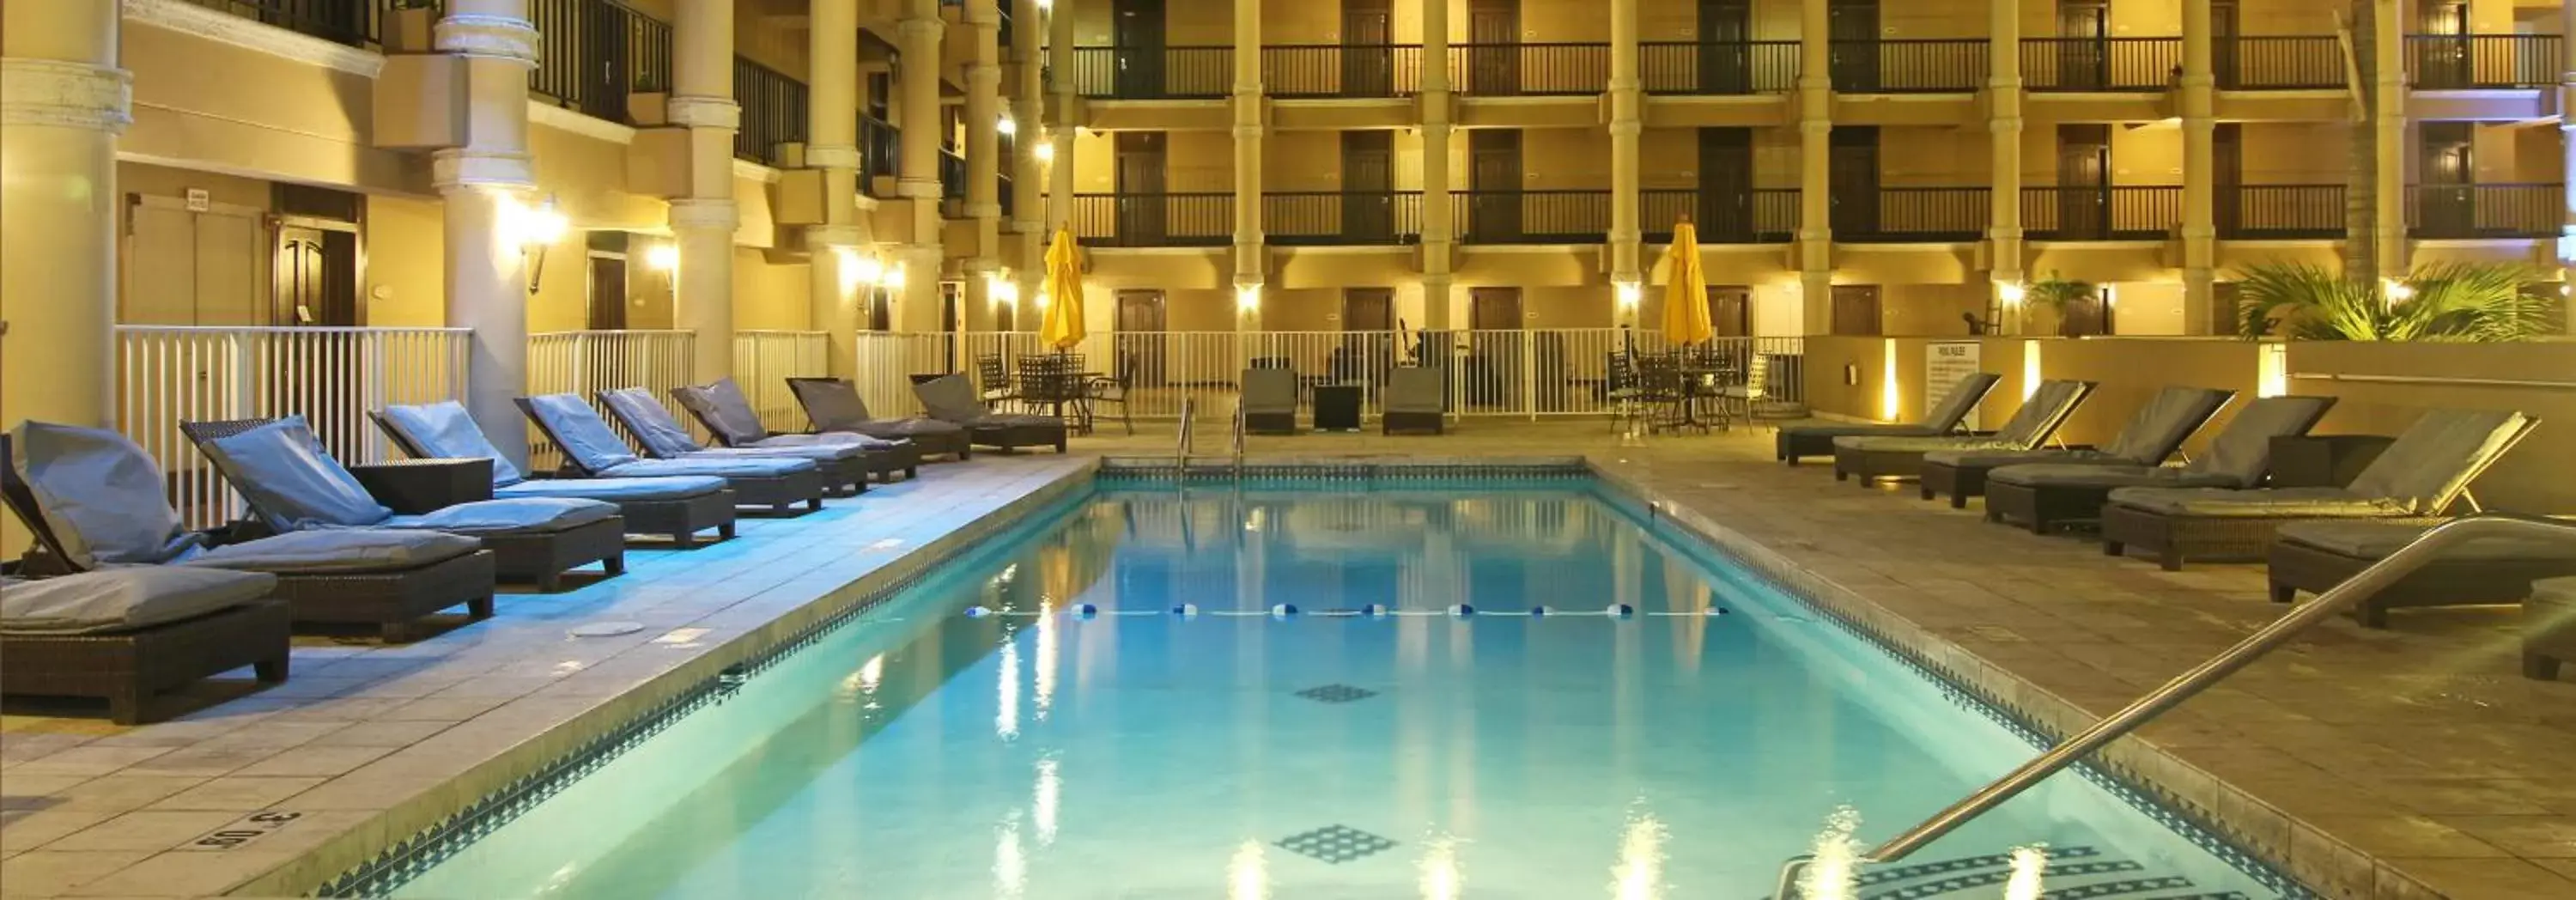 Swimming Pool in Windward Passage Hotel